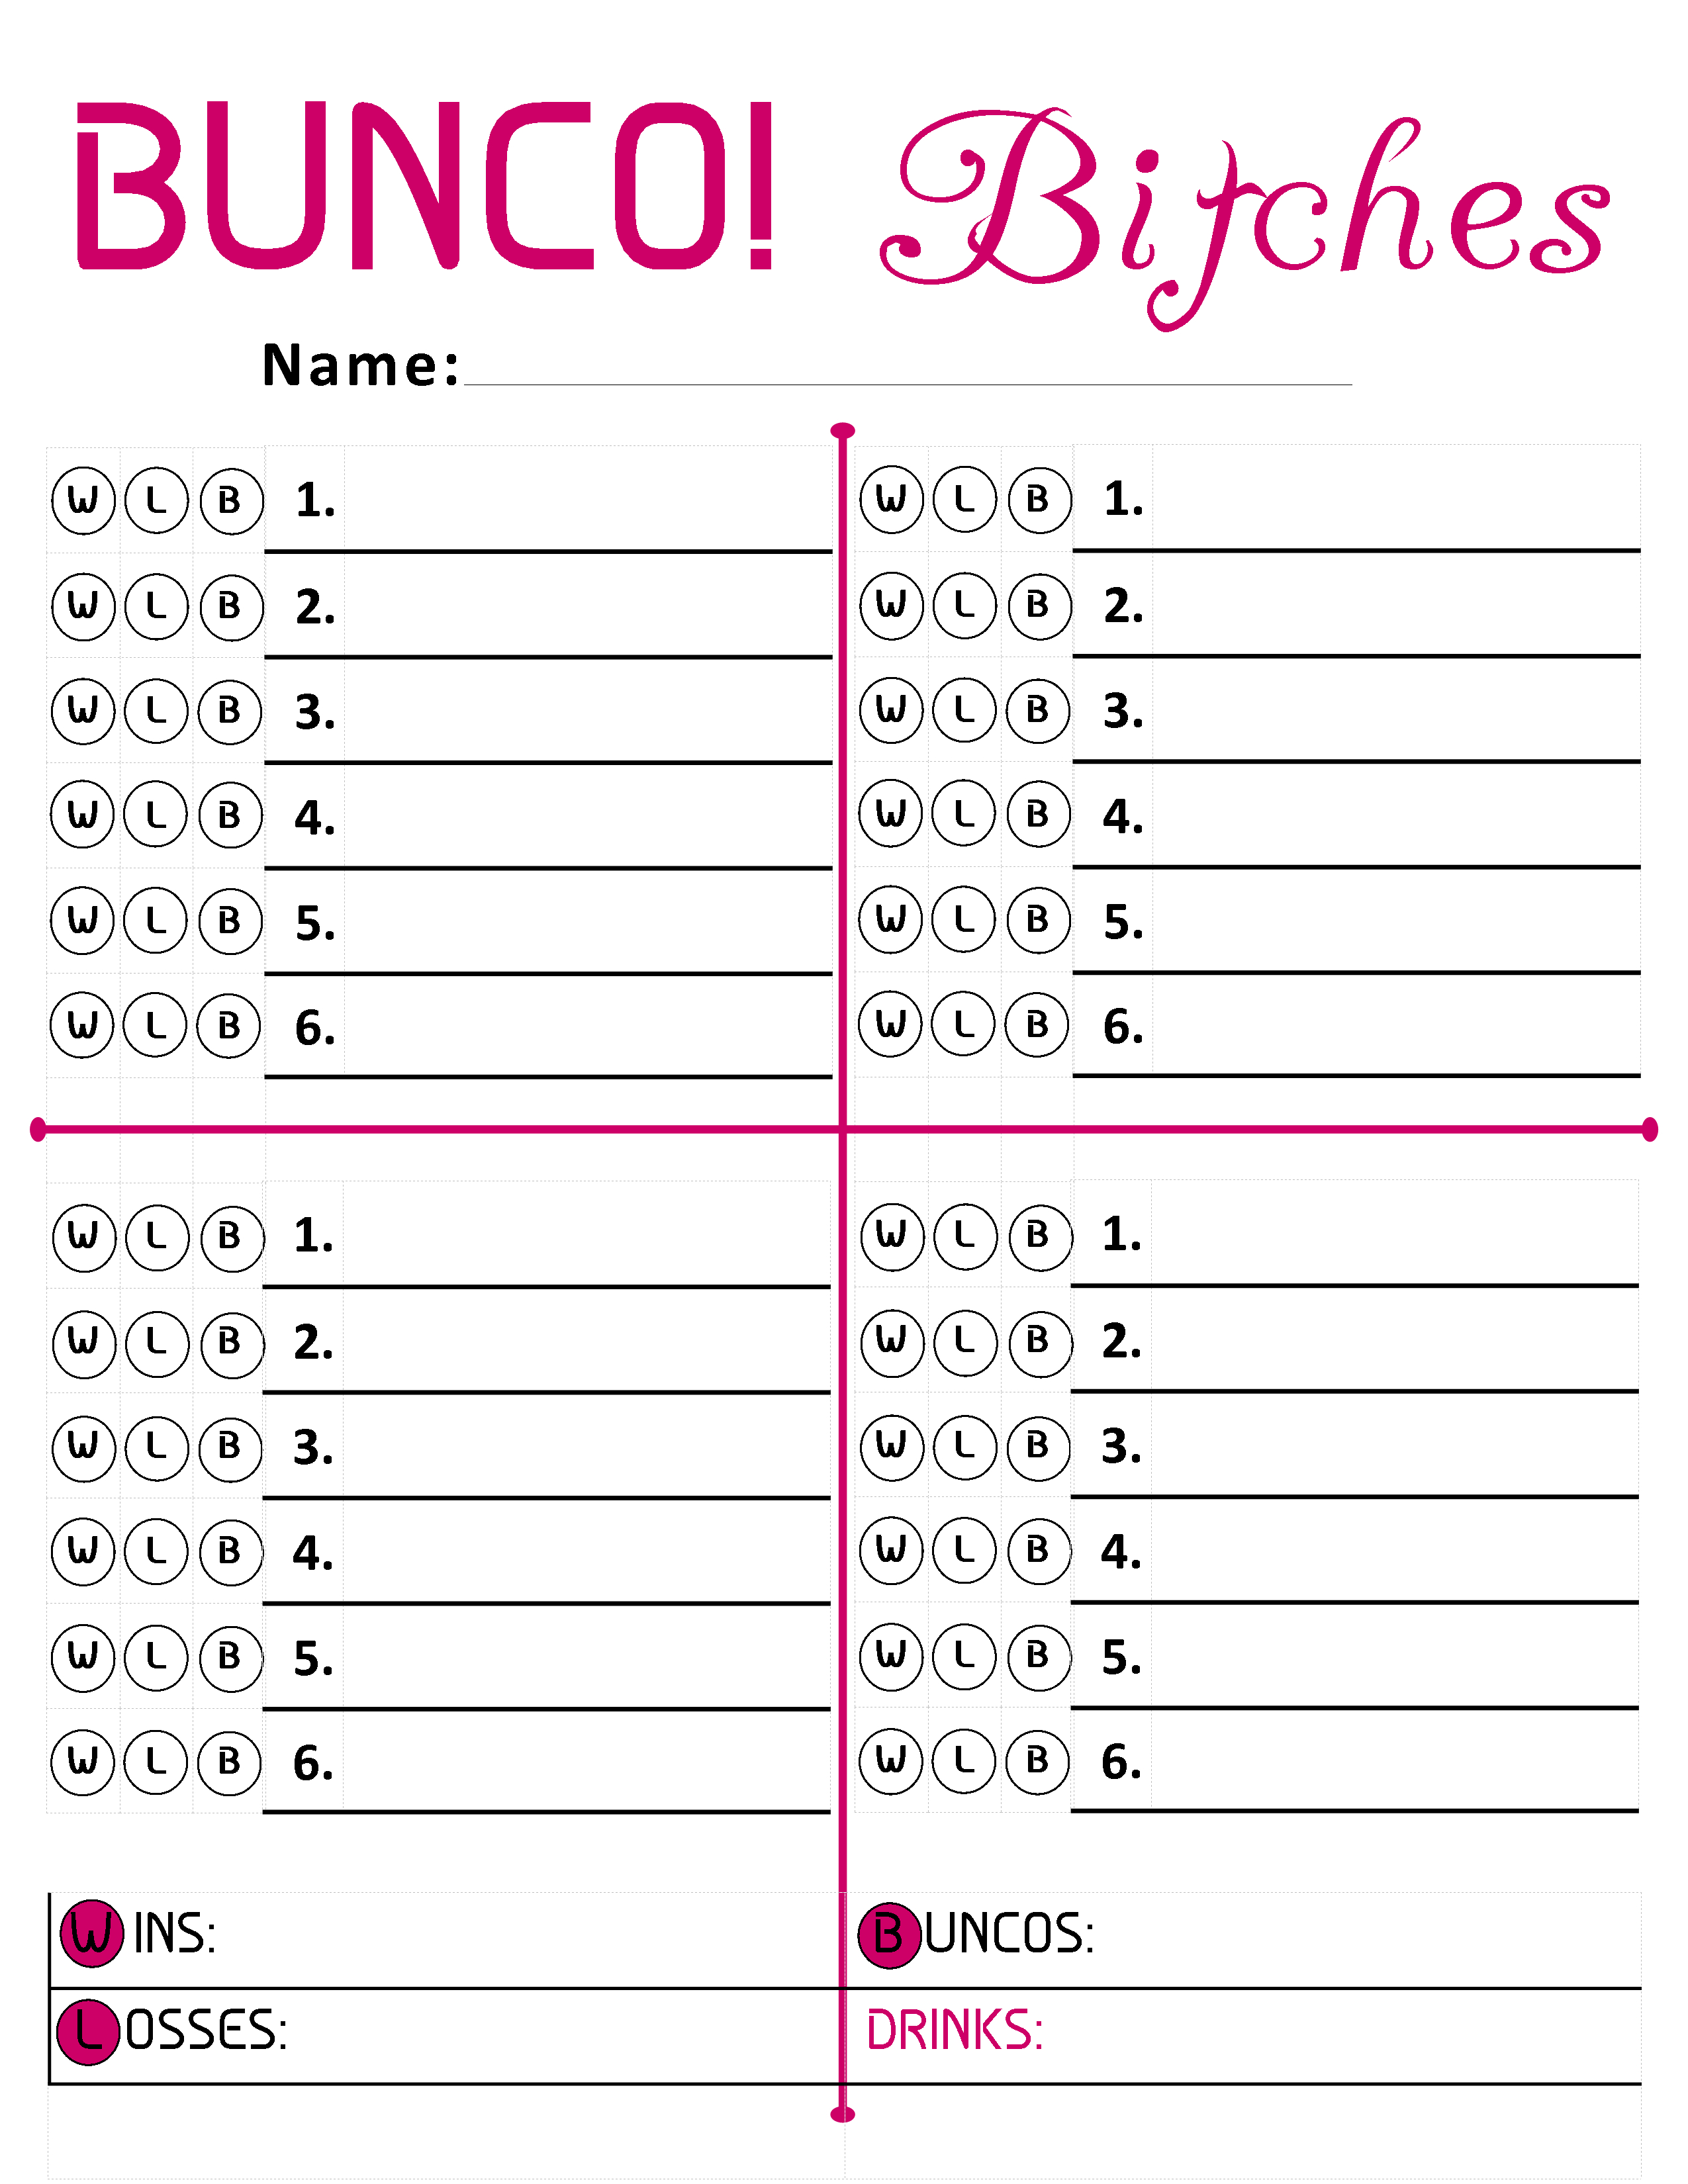 Bunco Score Sheet Free Printable